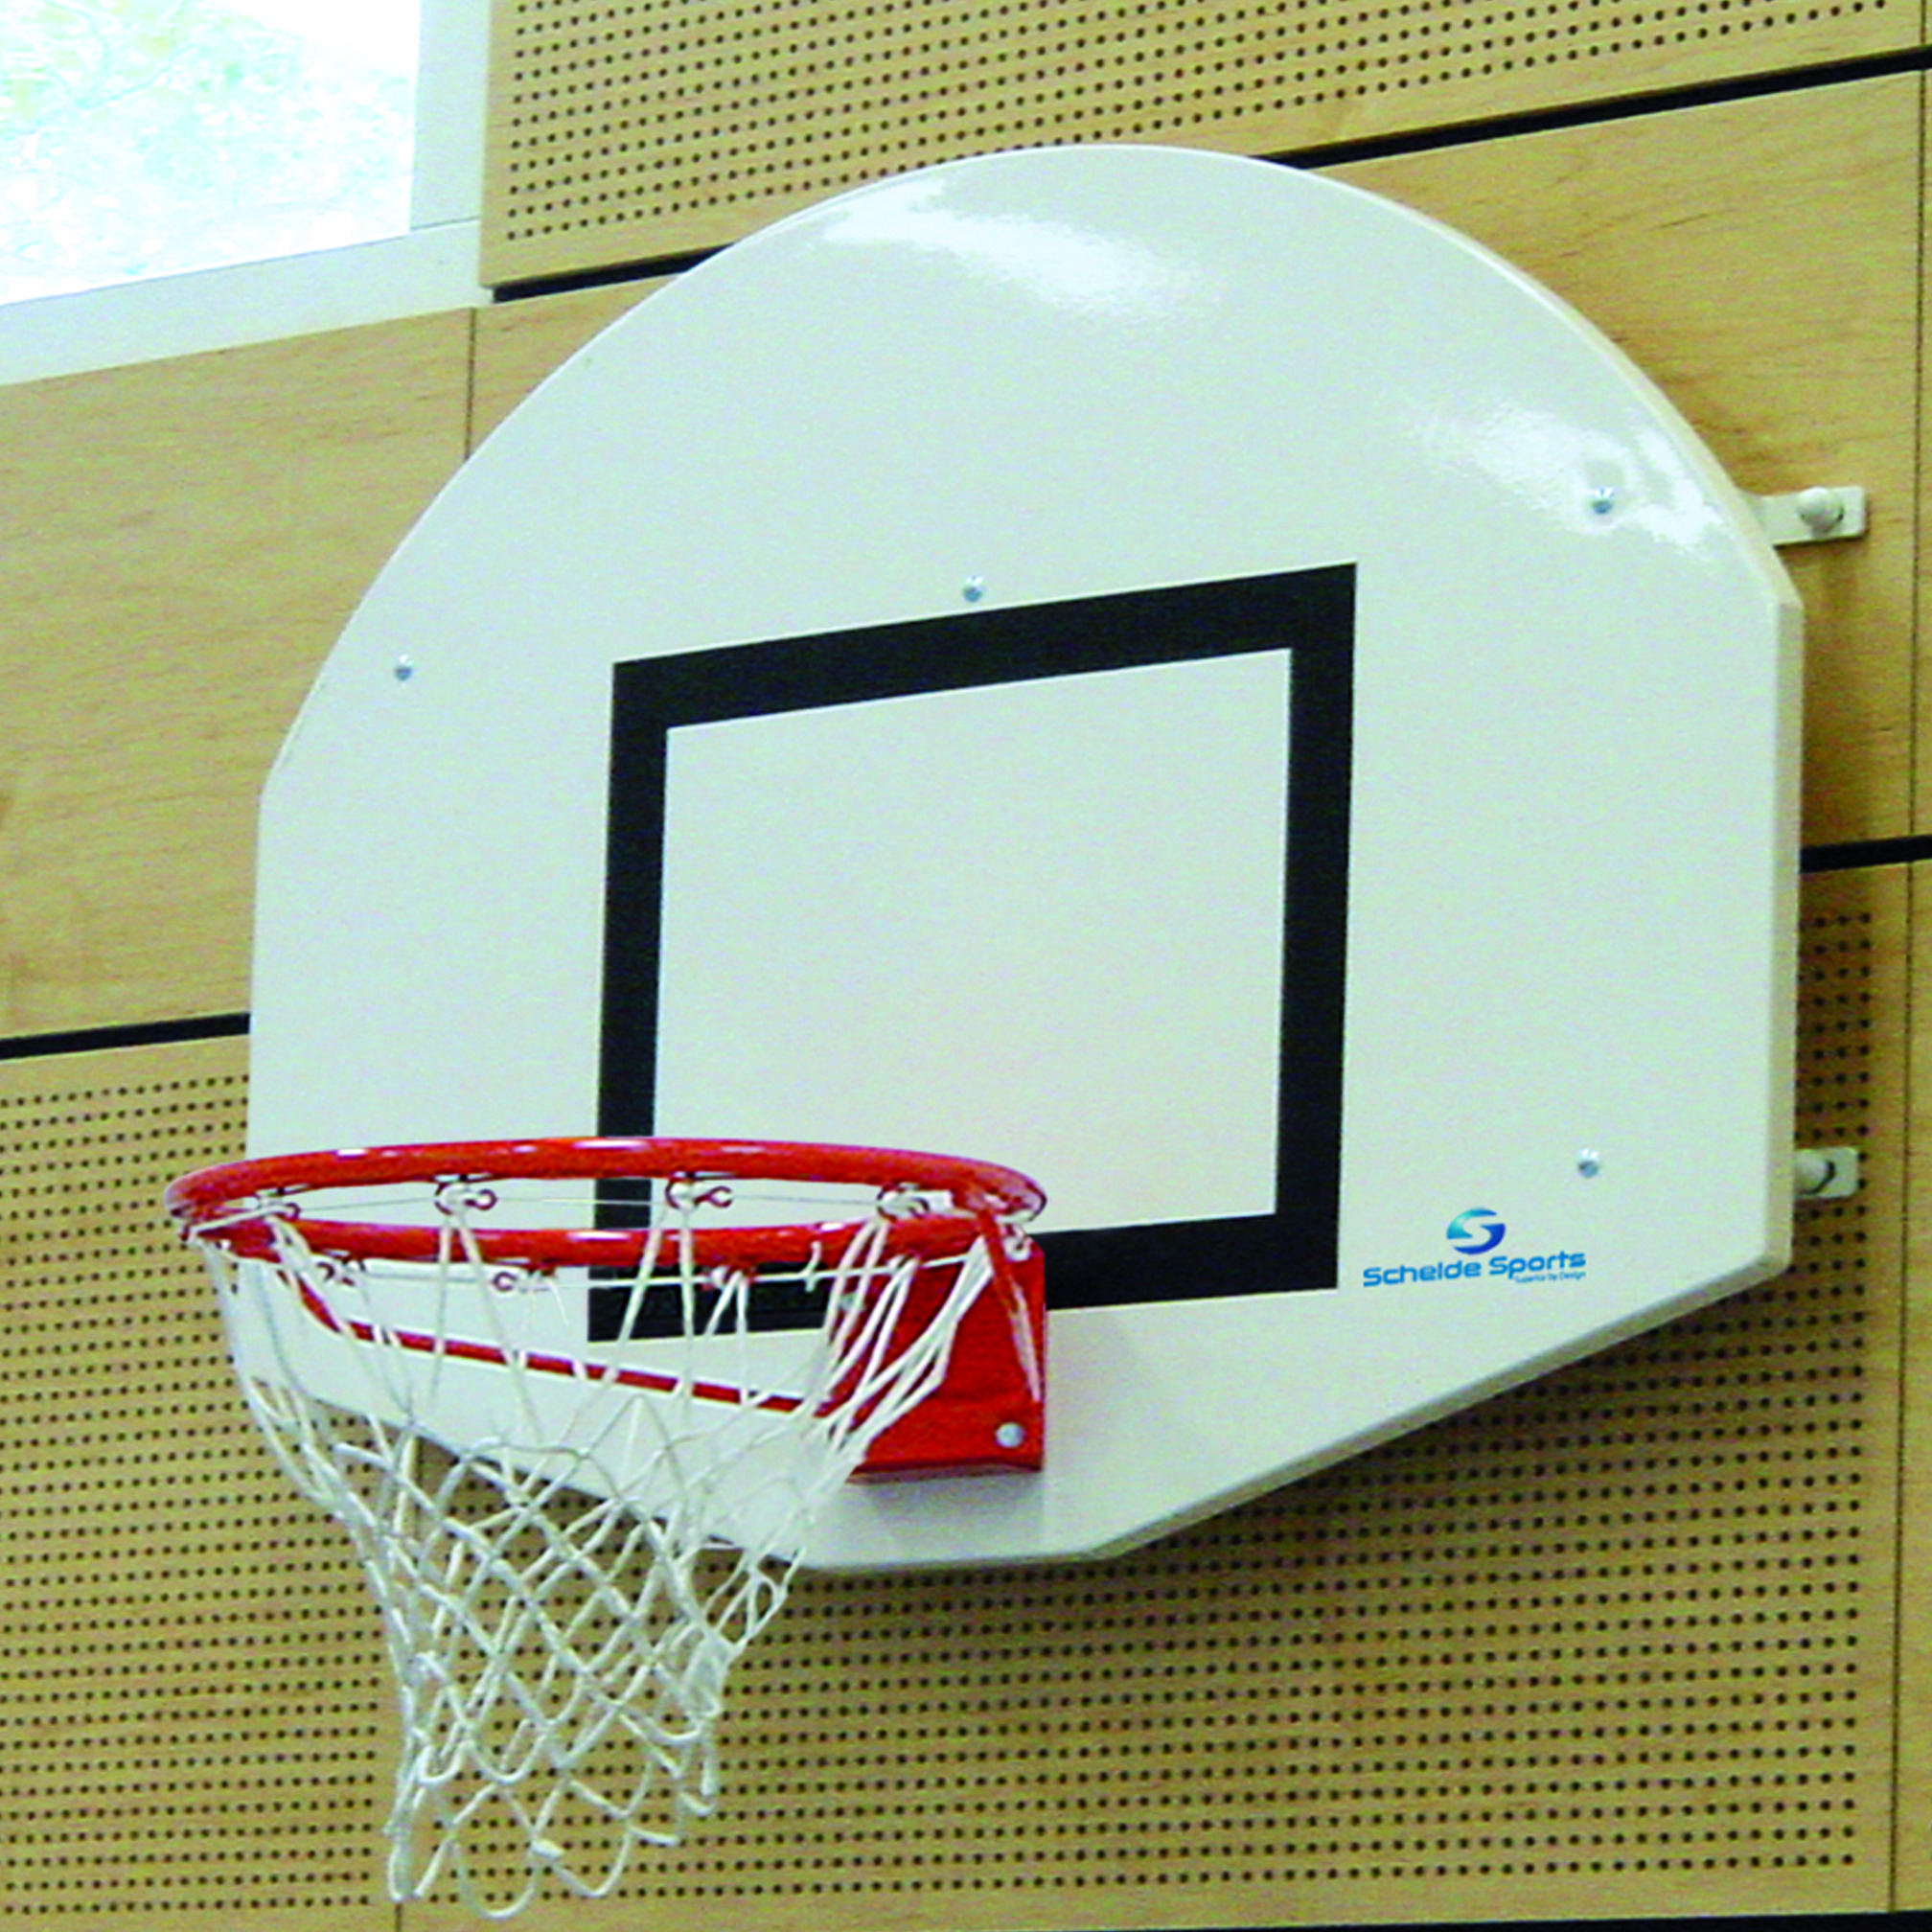 Feste Basketballanlage mit Wandbefestigung, fächerförmig